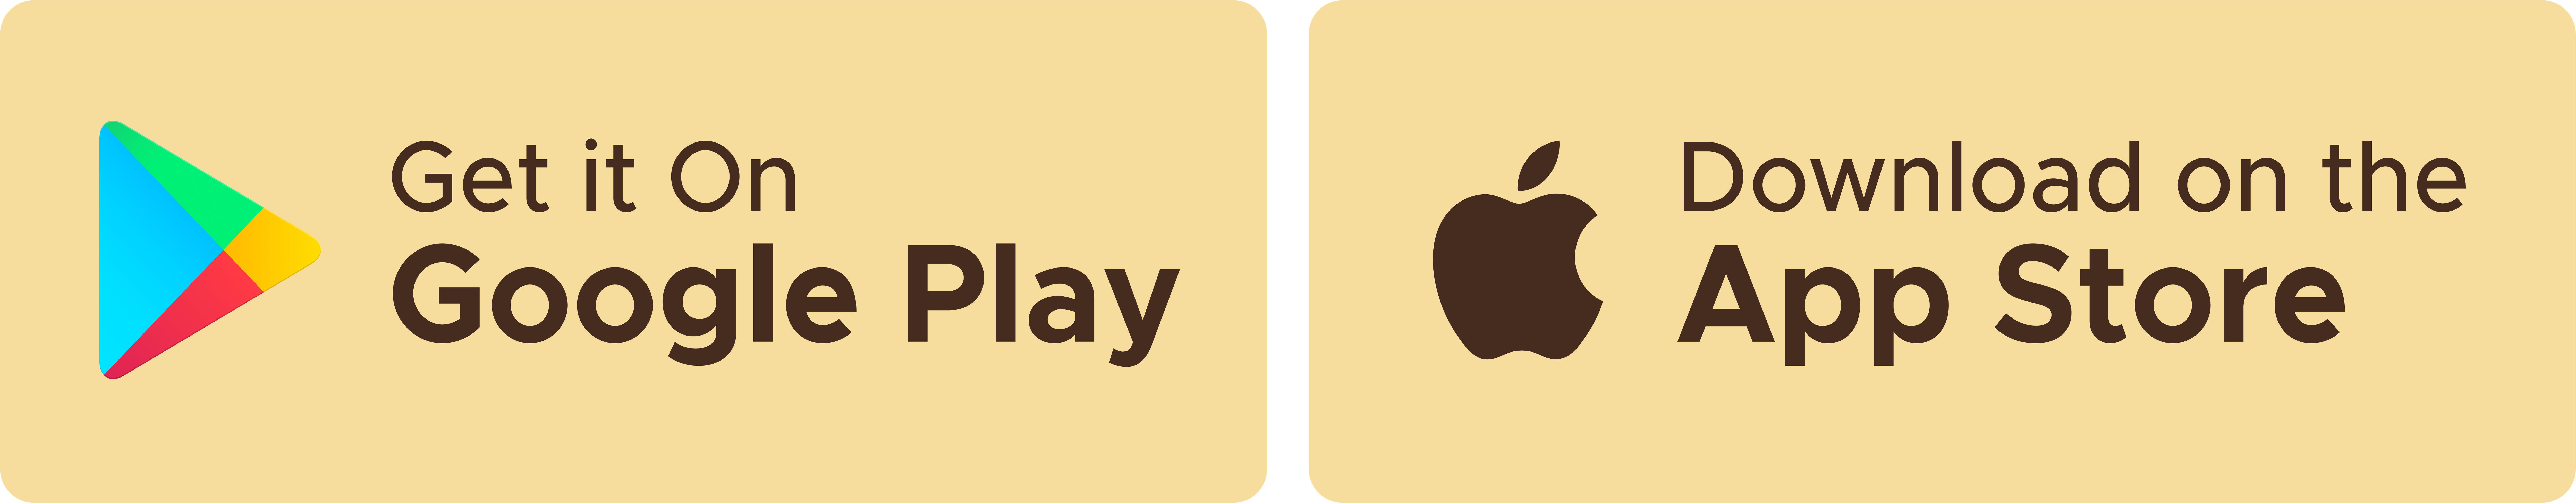 Google Play and App Store logos